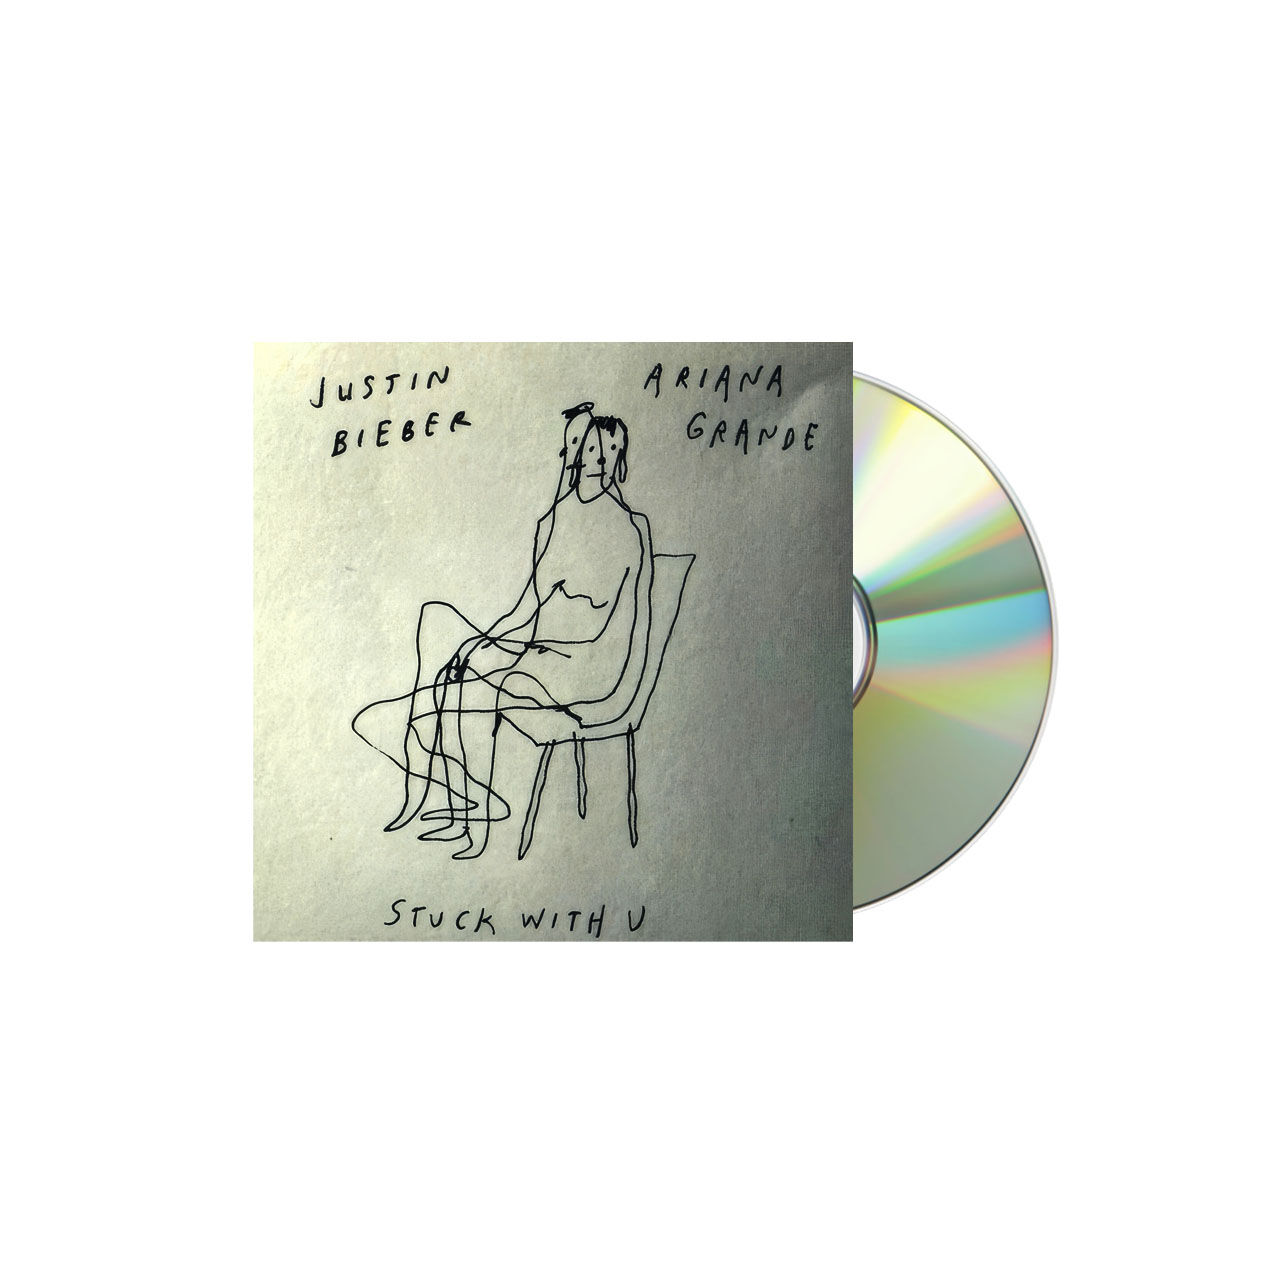 JUSTIN BIEBER, ARIANA GRANDE Stuck With U Alternate Cover Digipak CD